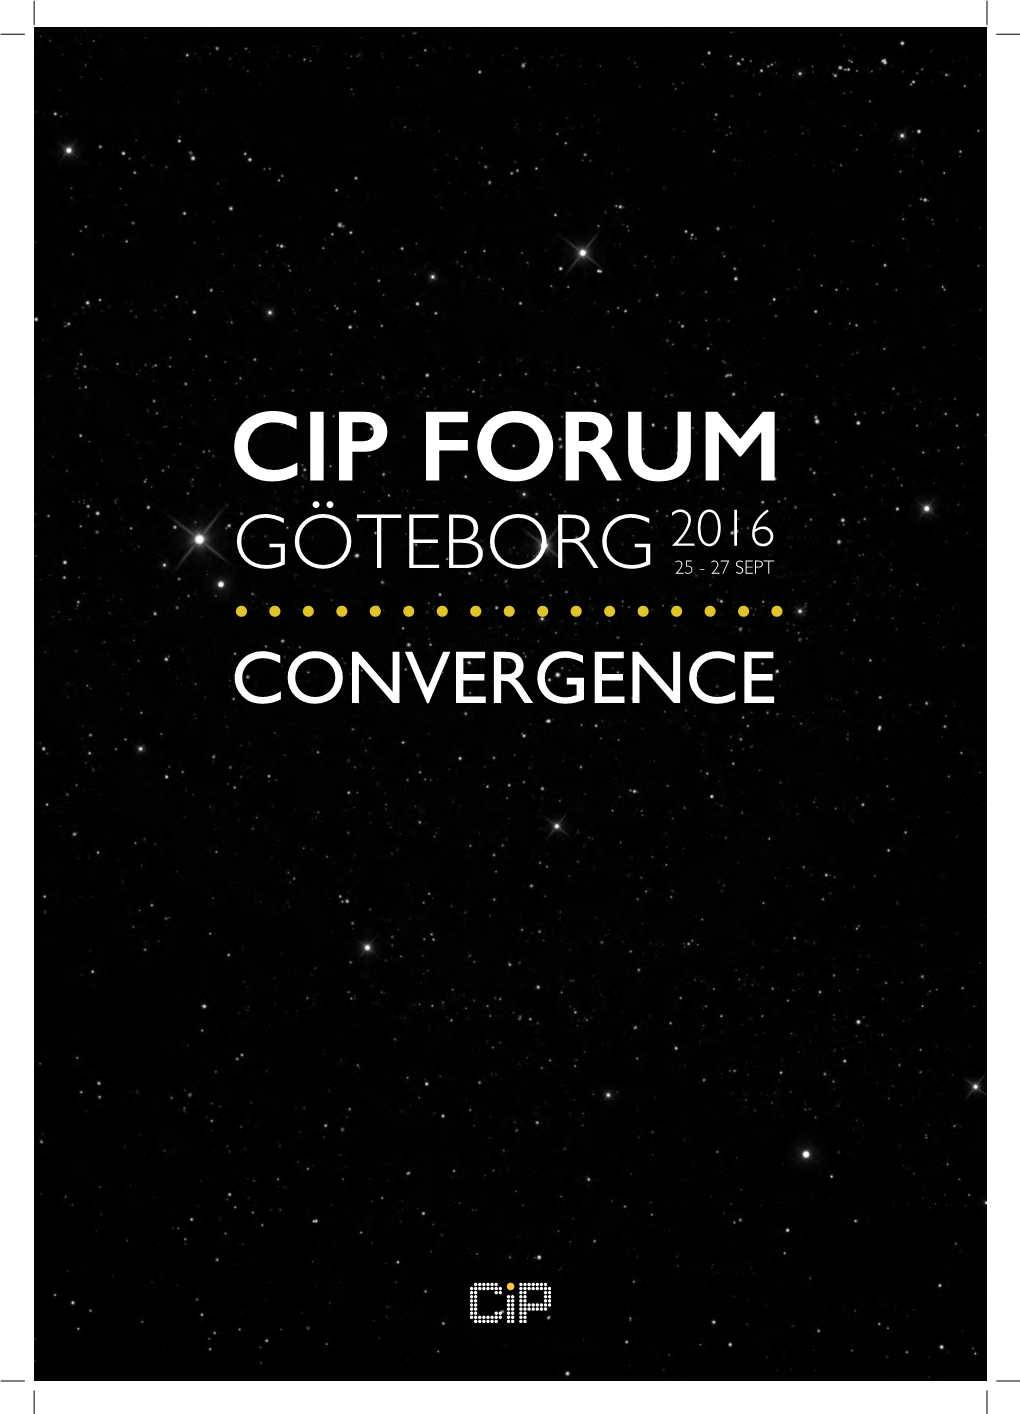 Cip Forum 2016 Göteborg 25 - 27 Sept Convergence Cip Forum 2016 | Program